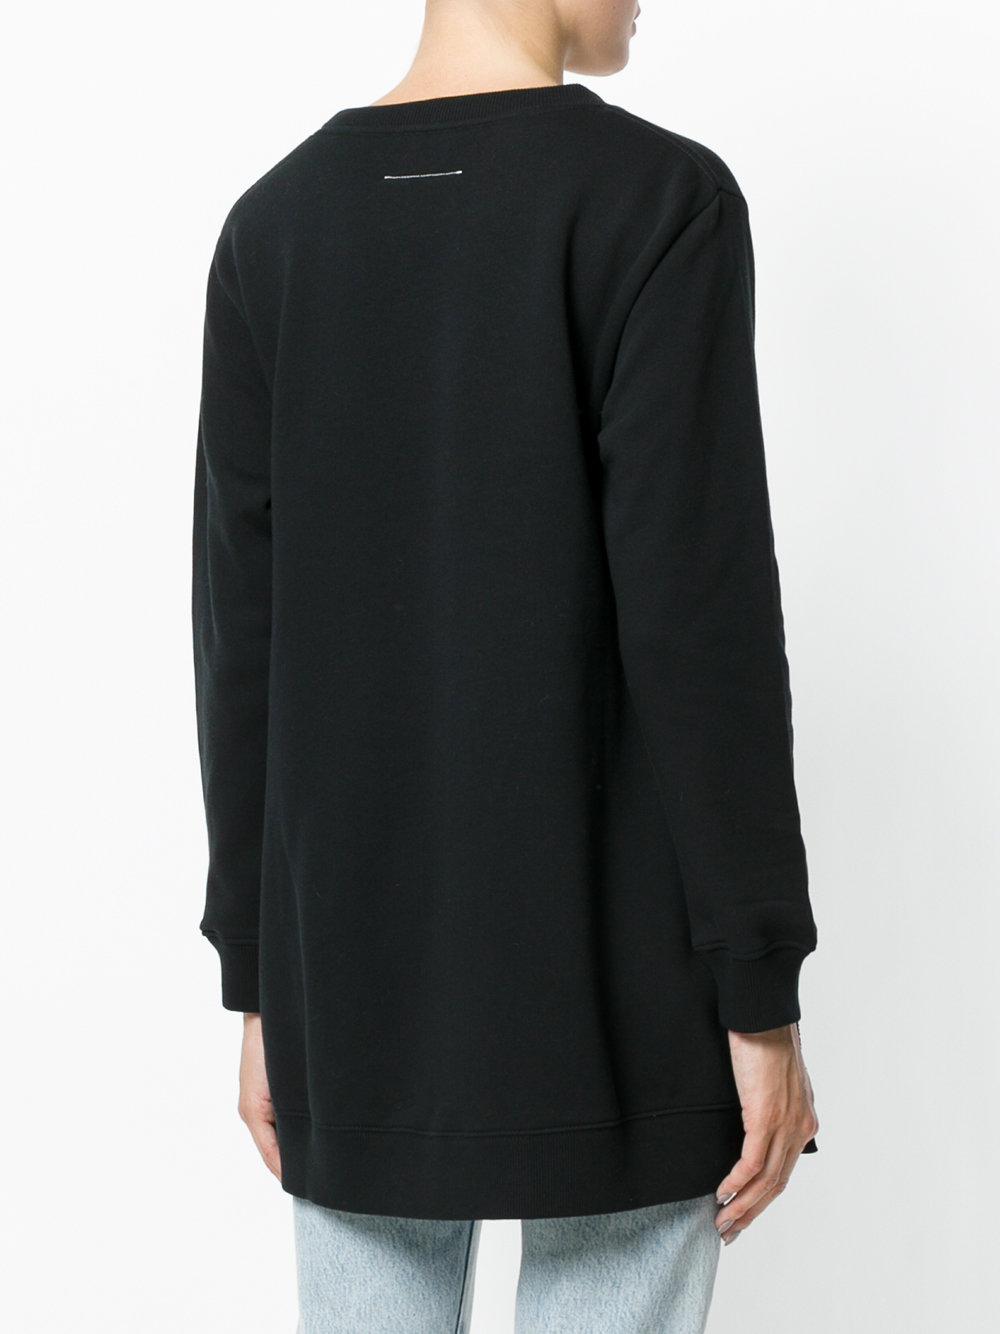 Lyst - Mm6 By Maison Martin Margiela Oversized Sweater in Black